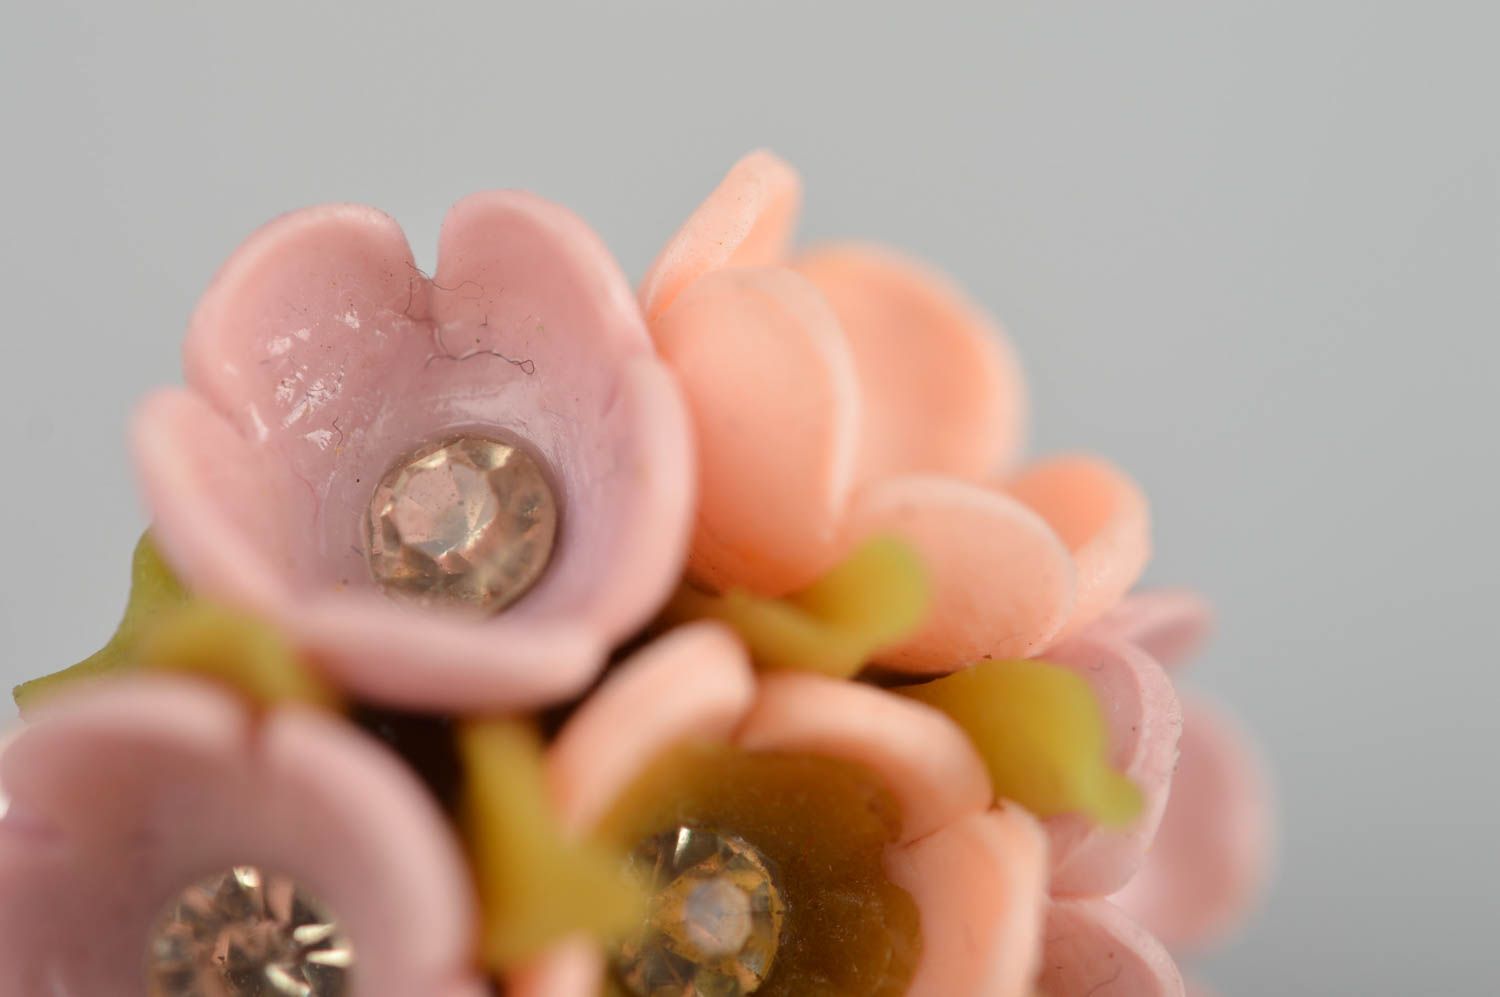 Gentle handmade flower ring artisan jewelry designs handmade gifts for her photo 6